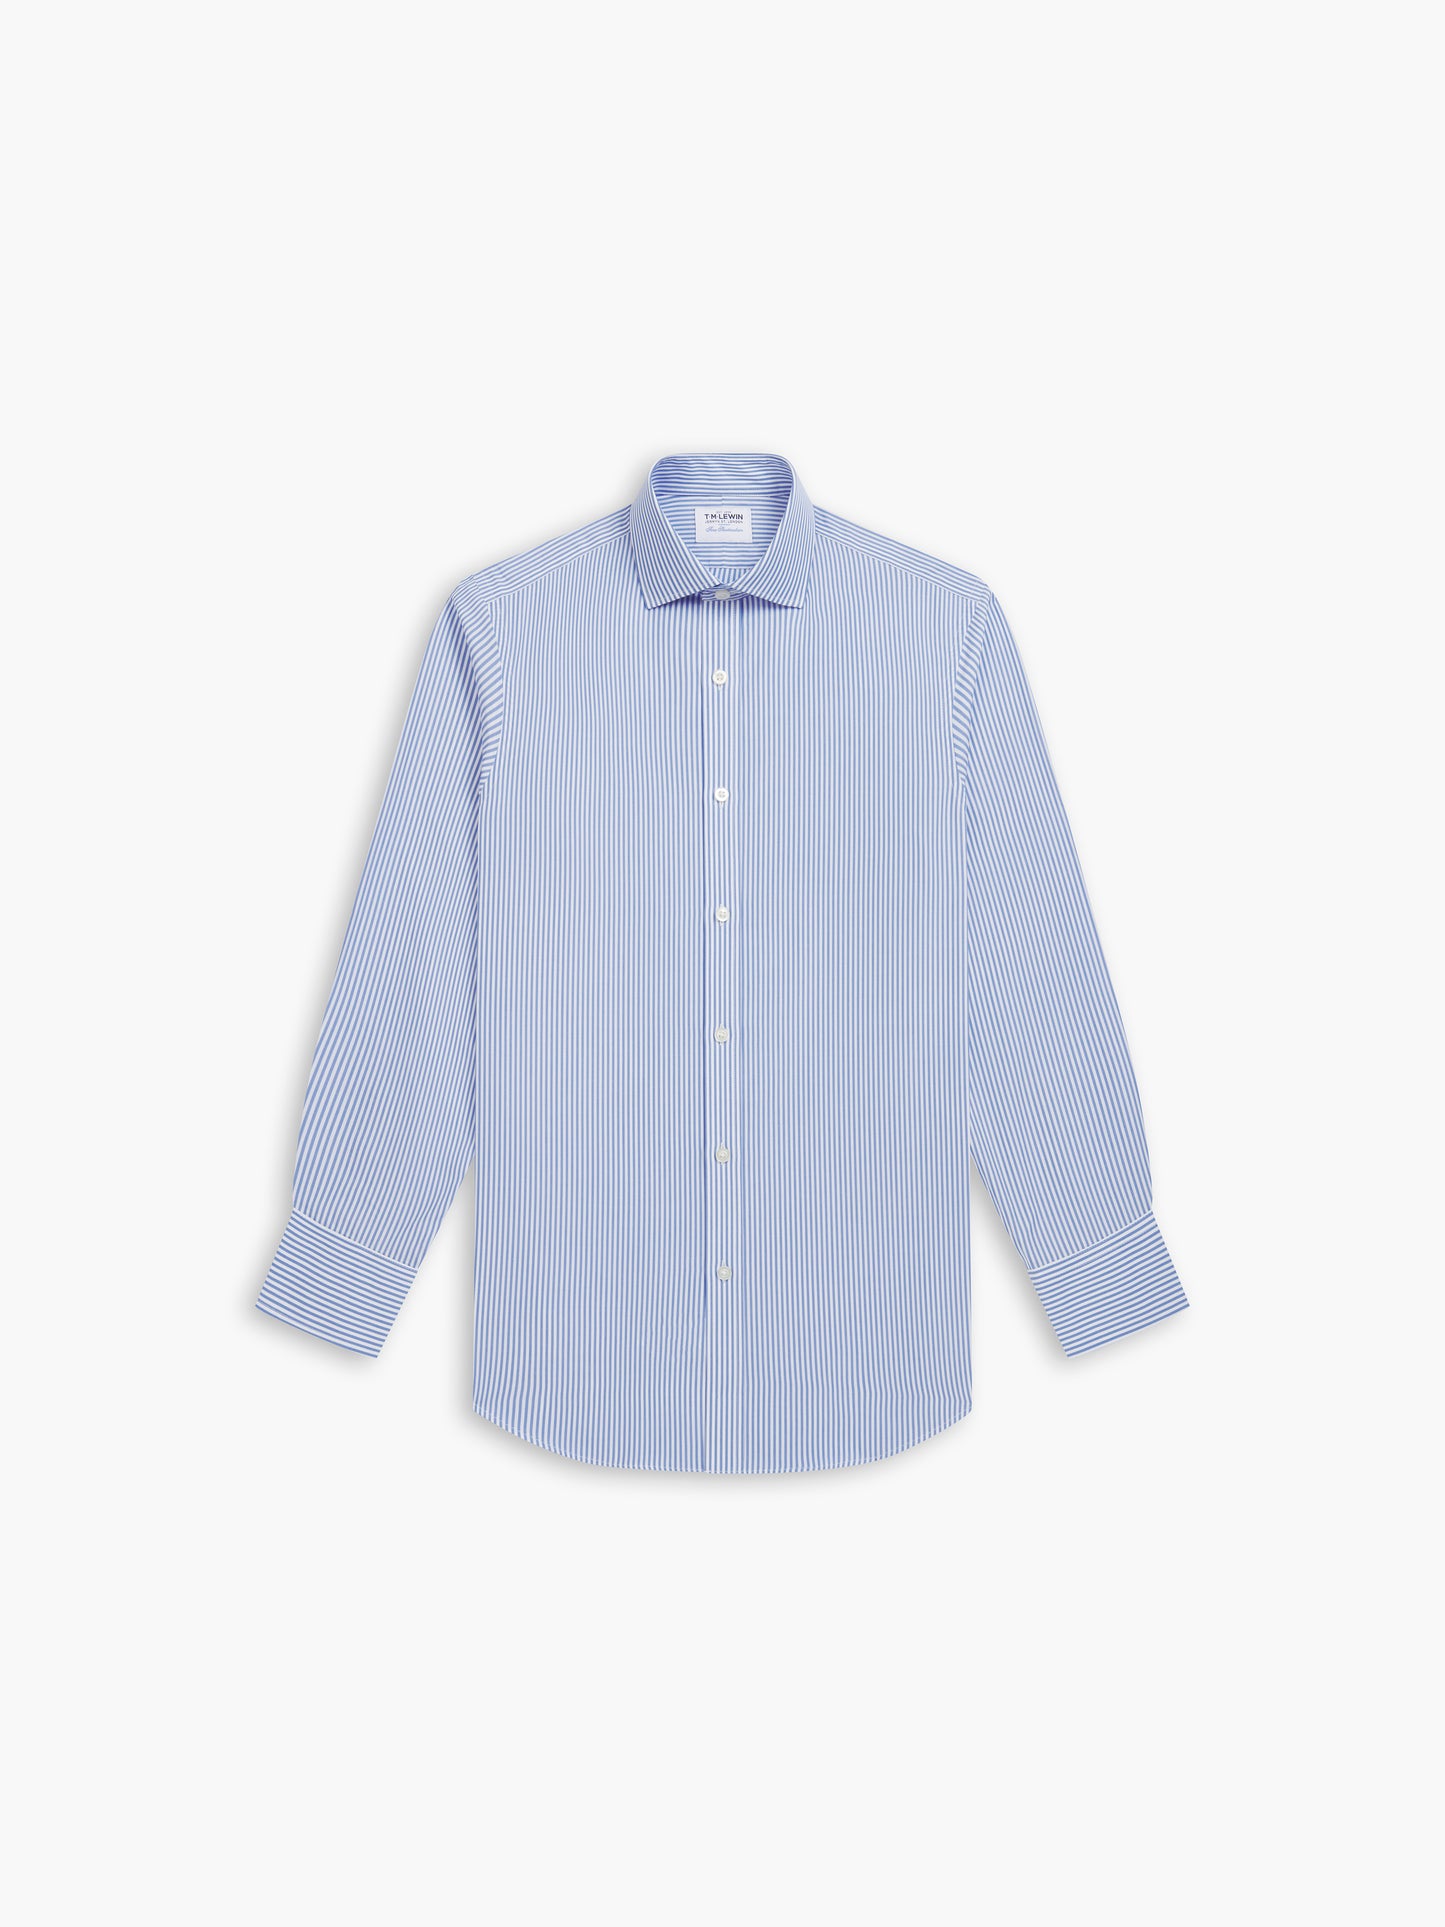 Image 2 of Non-Iron Light Blue Stripe Poplin Fitted Single Cuff Classic Collar Shirt